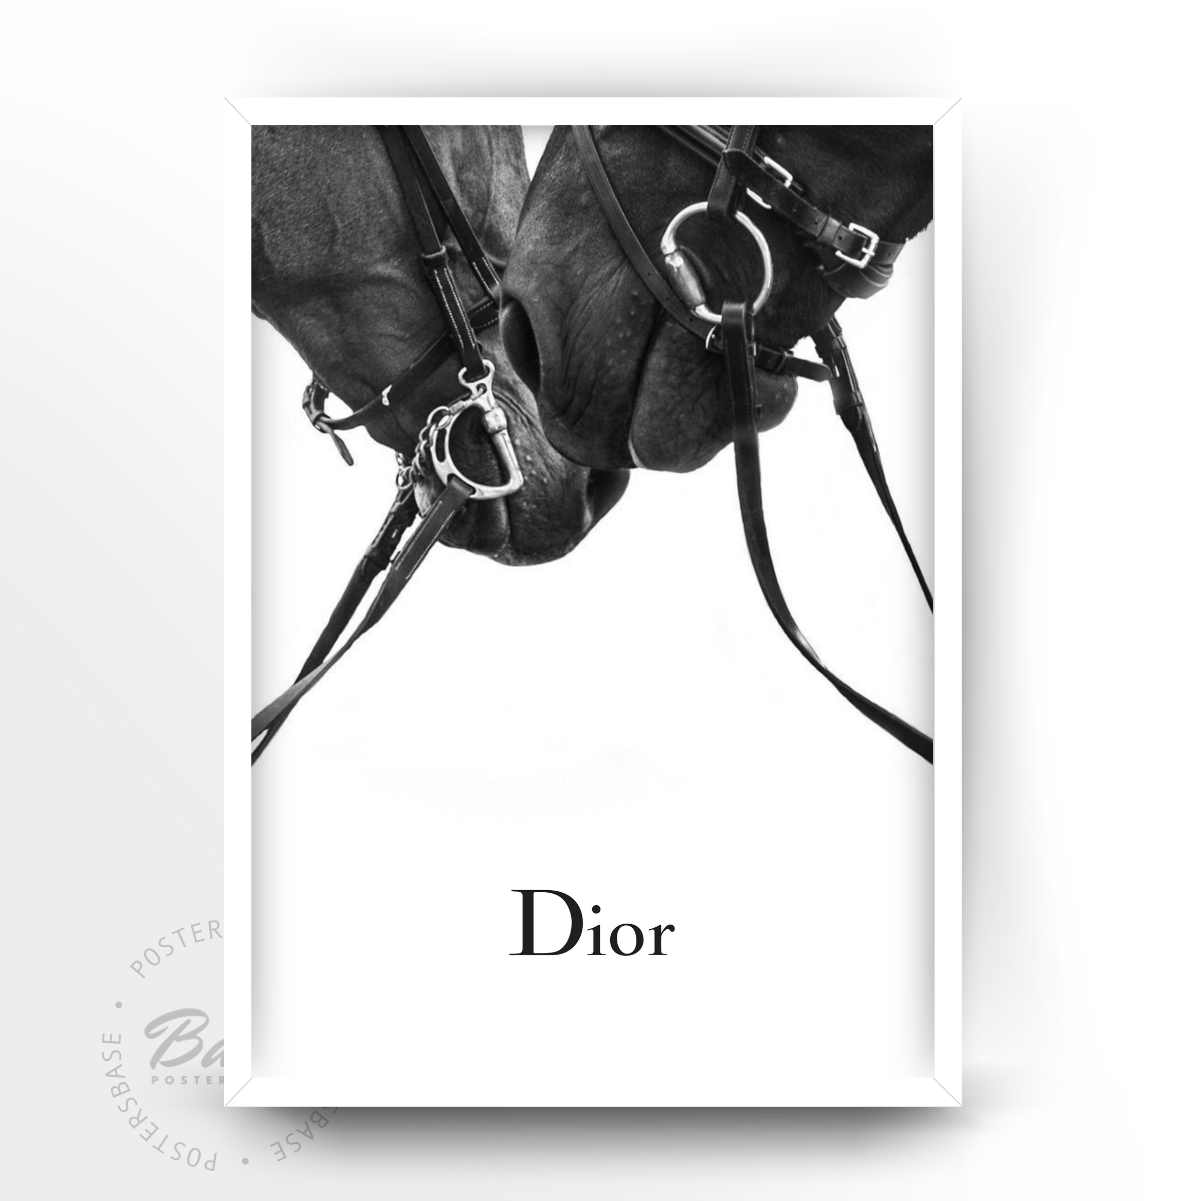 Dior Horse